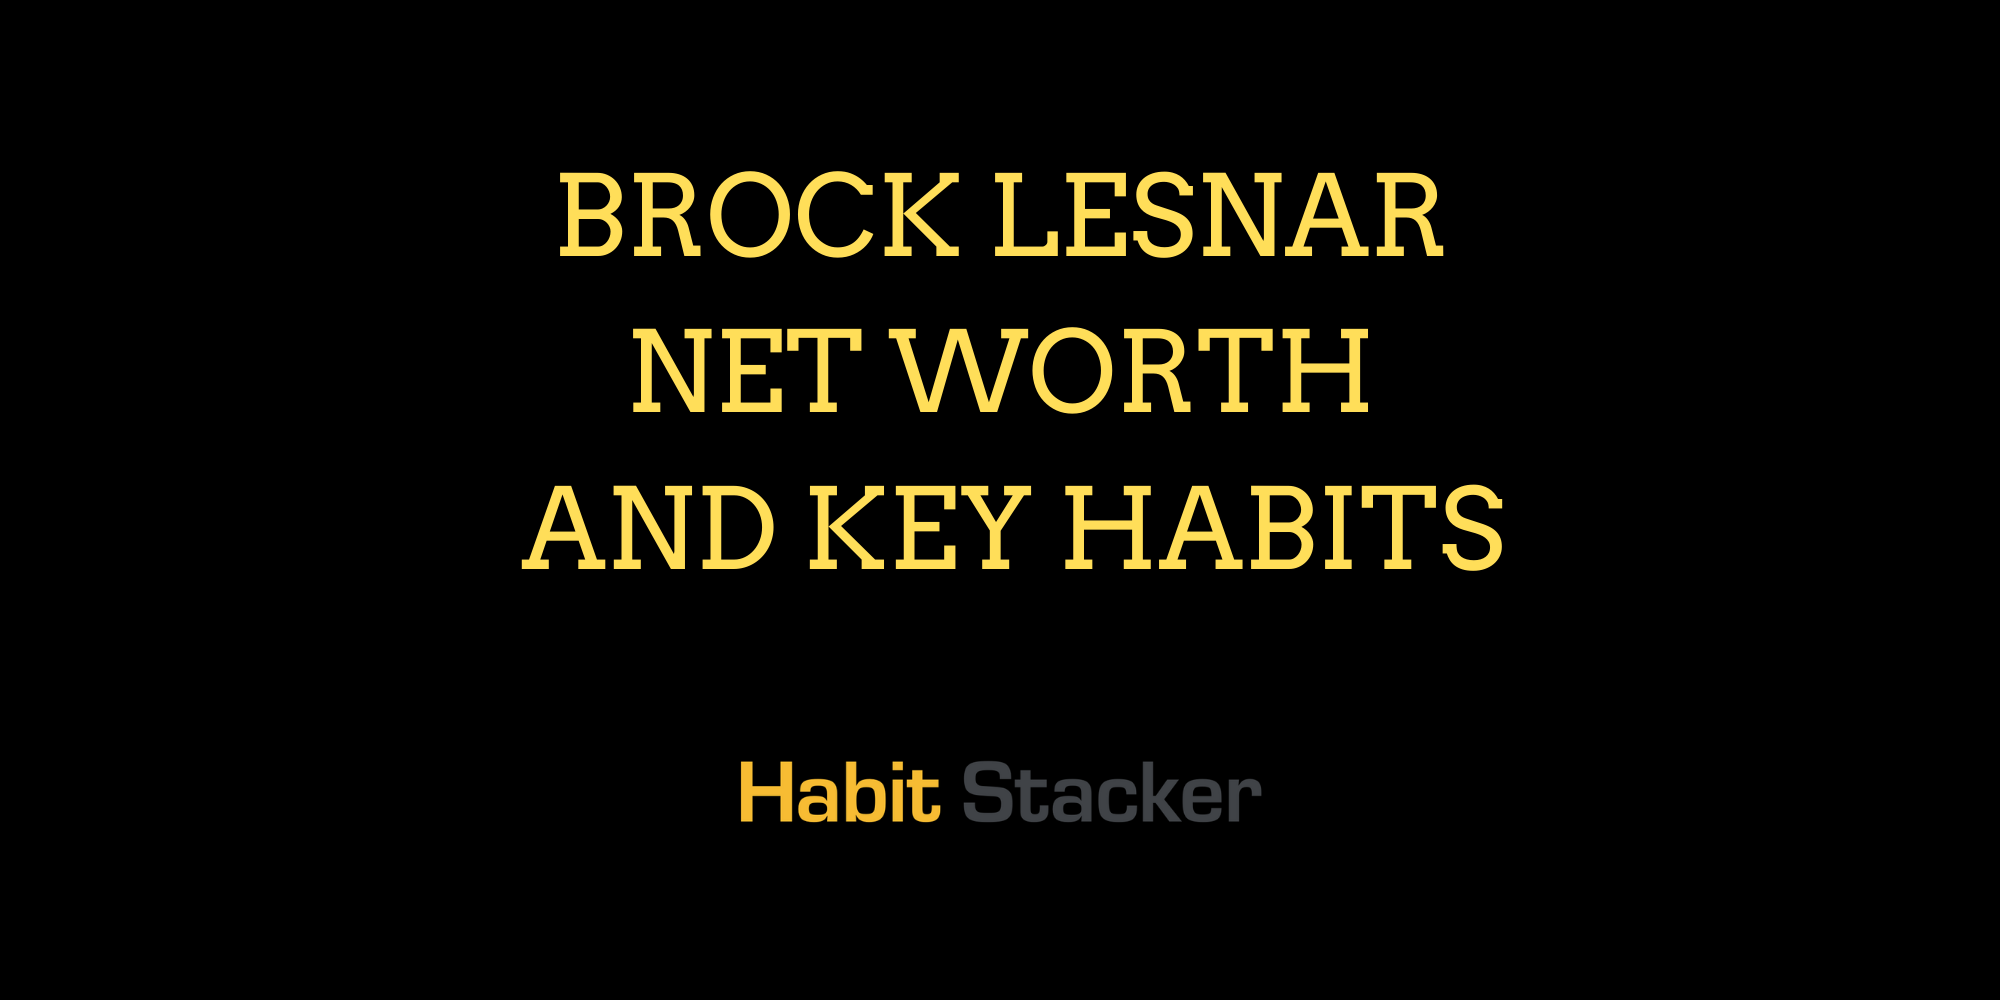 Brock Lesnar Net Worth and Key Habits